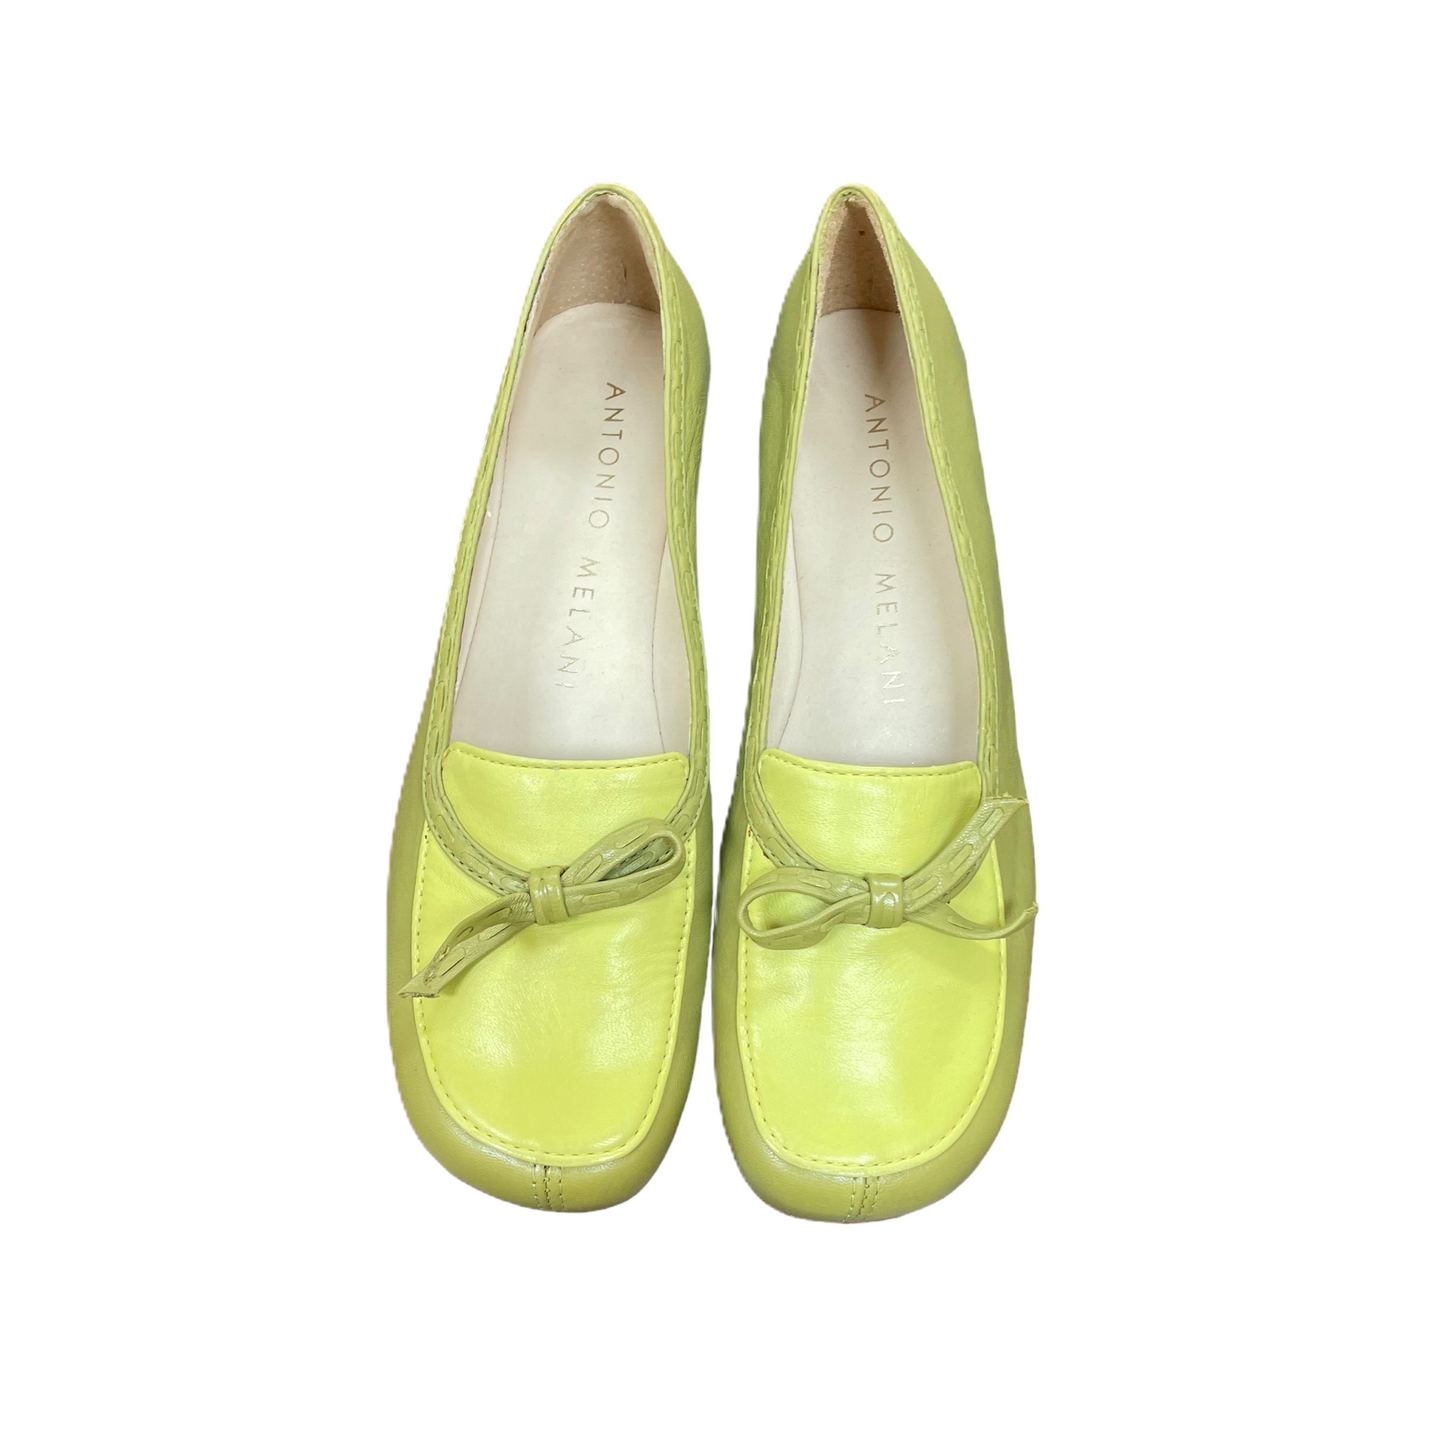 Green Shoes Flats By Antonio Melani, Size: 6